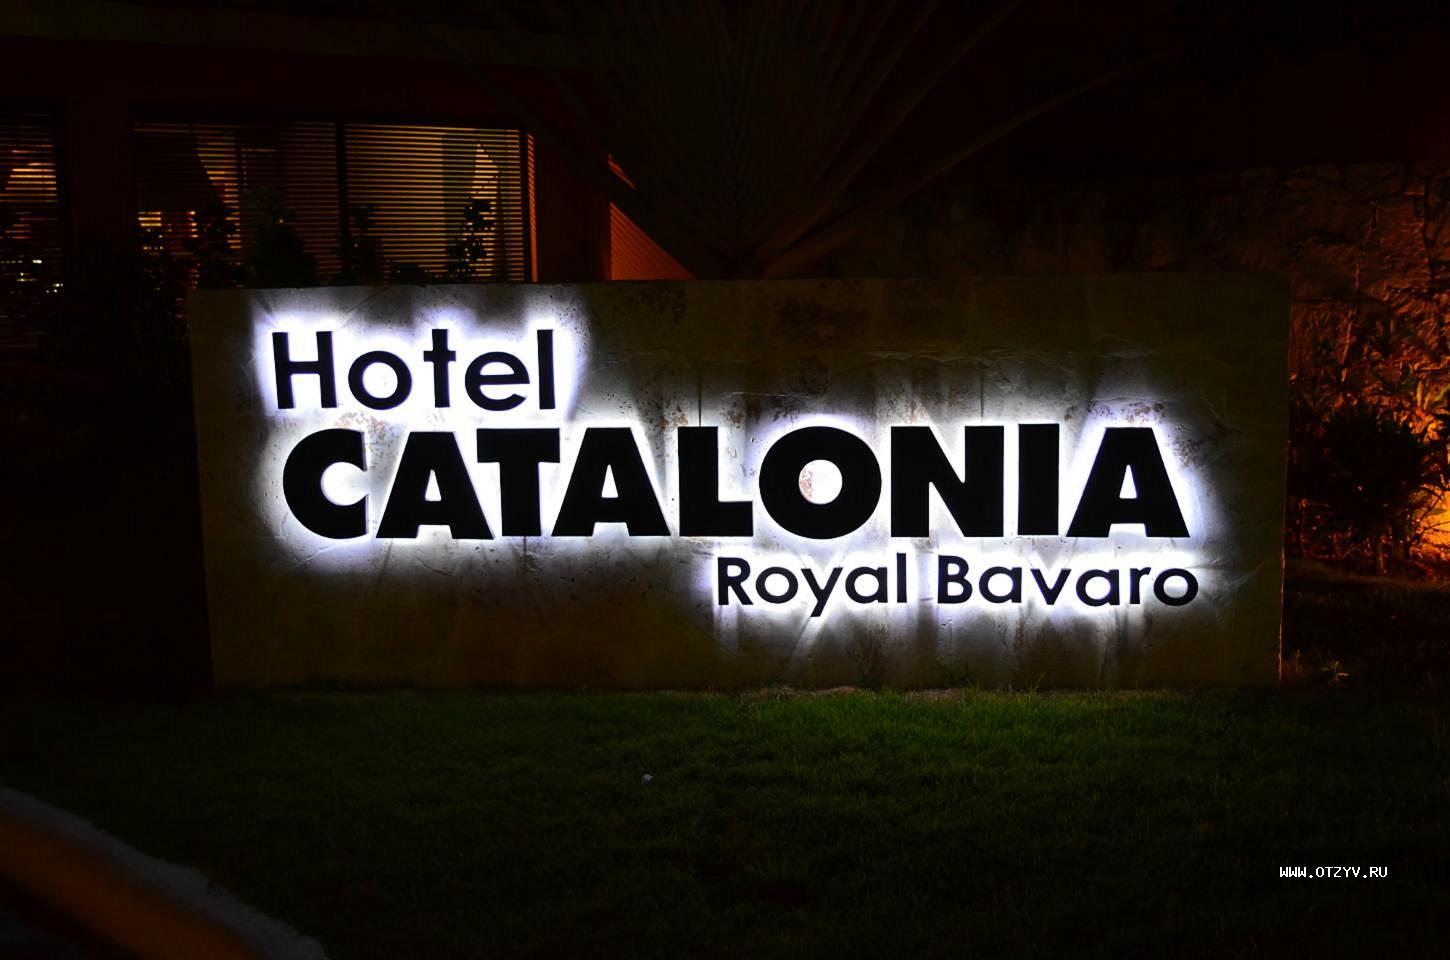 Catalonia Royal Bavaro